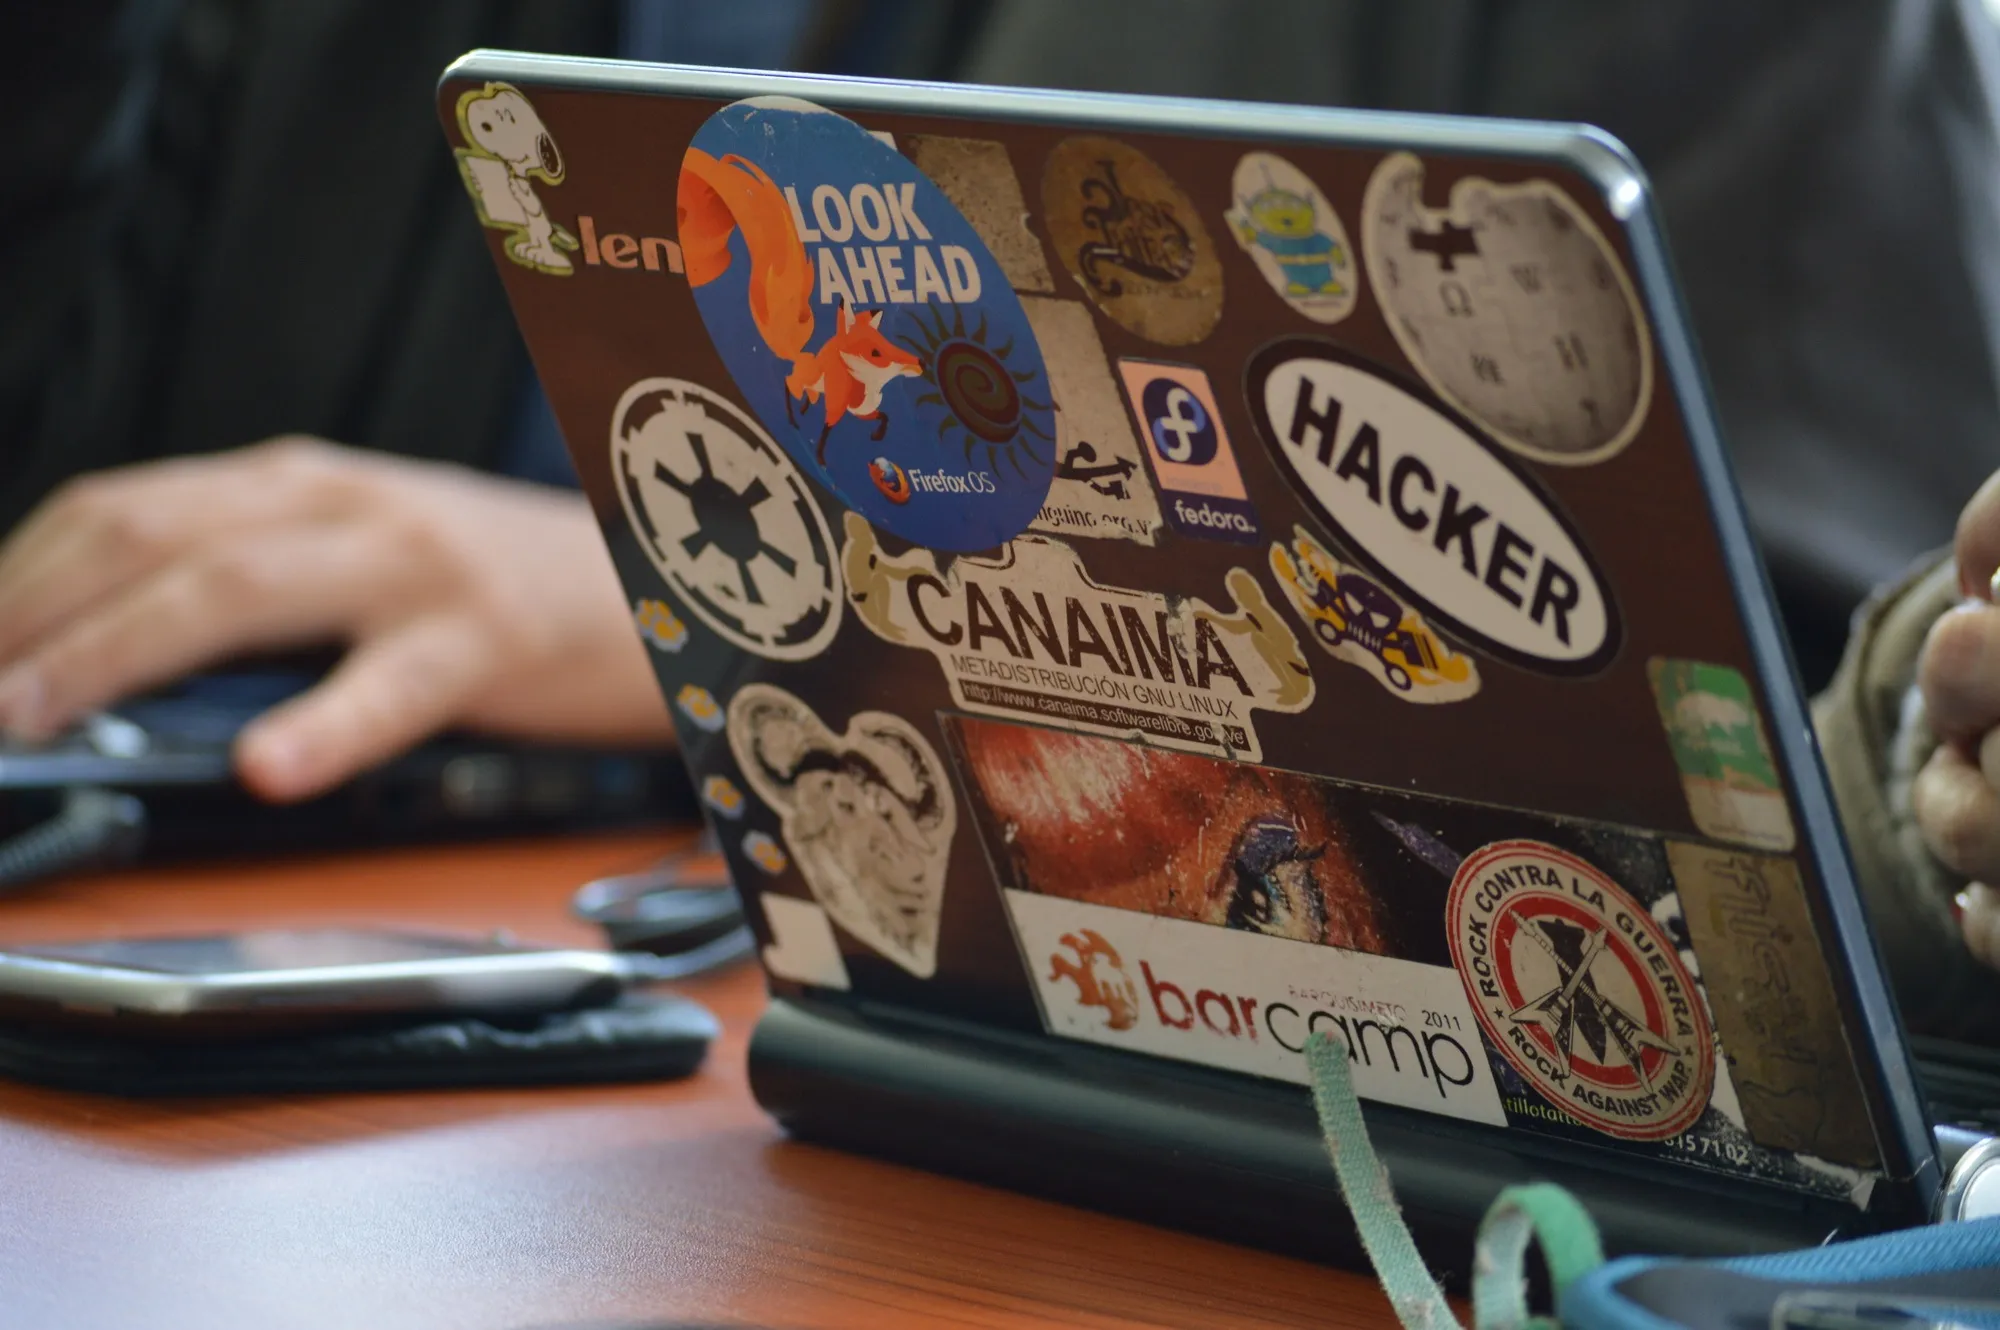 The phenomenon of laptop stickers